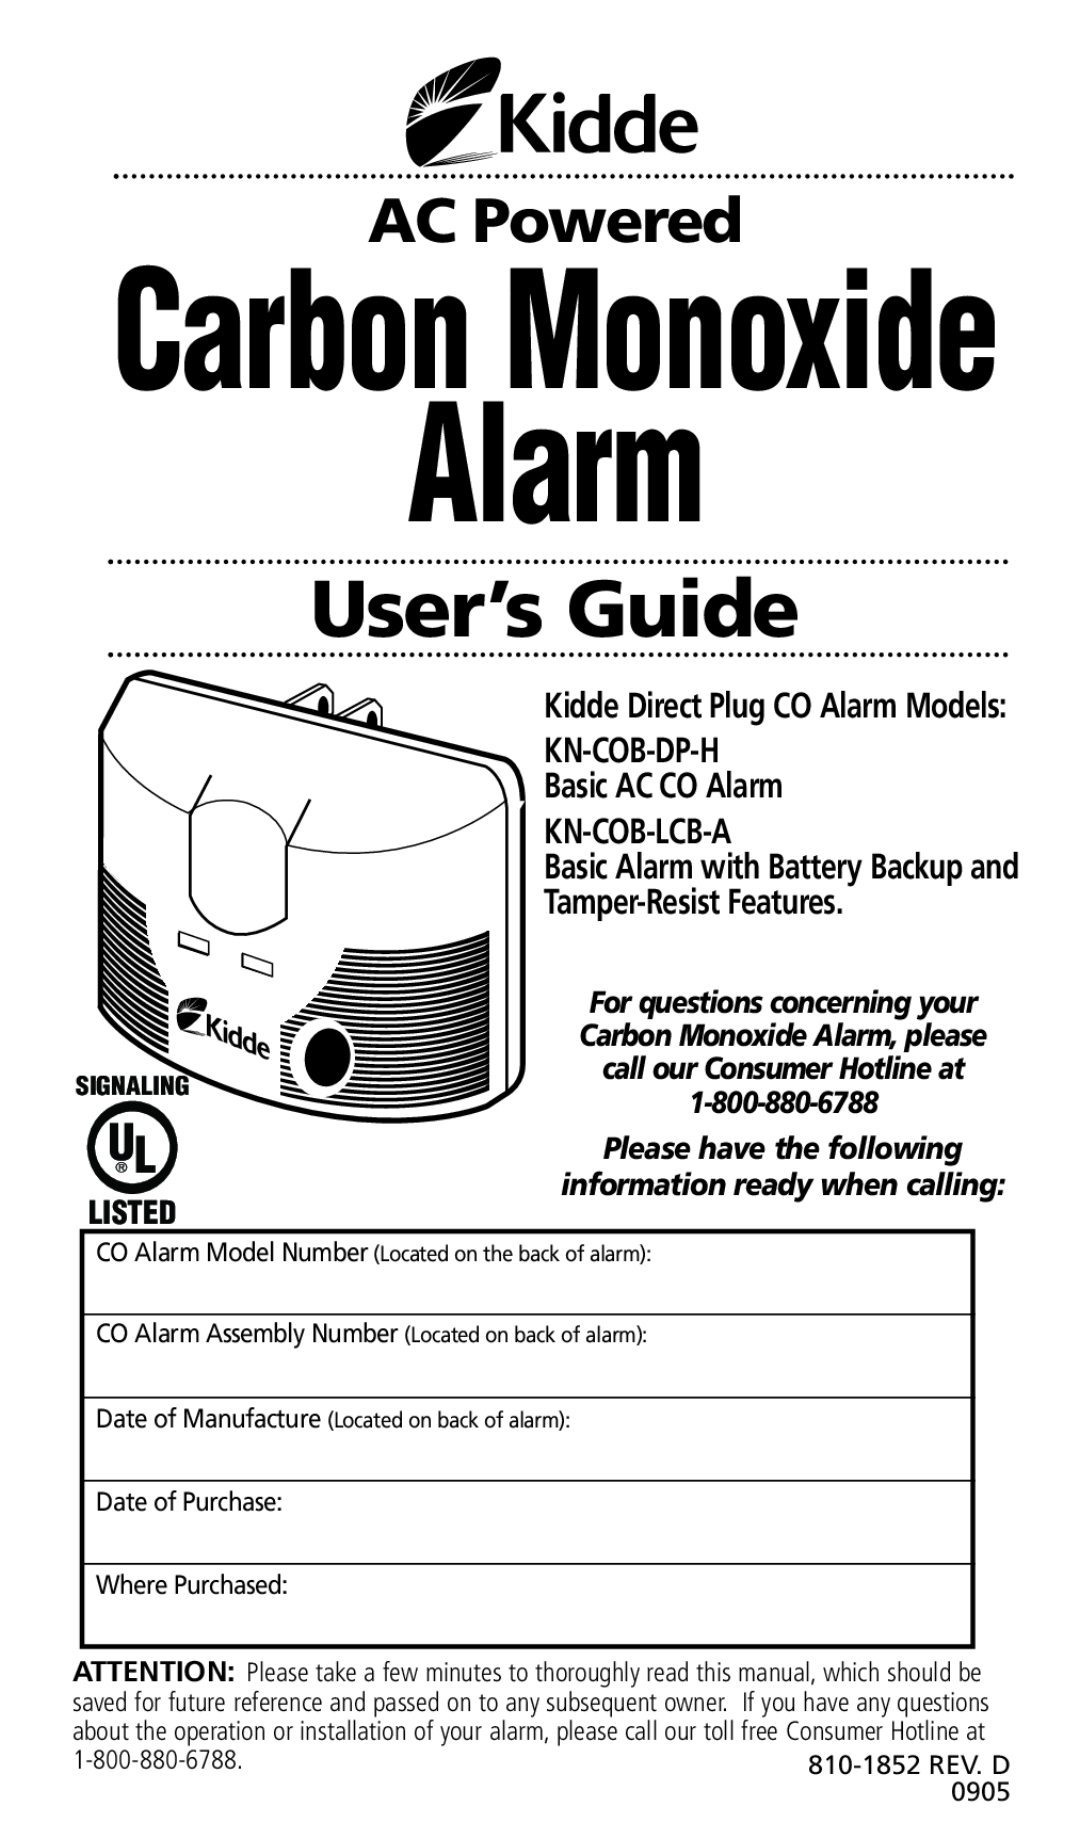 Kidde KN-COB-LCB-A, KN-COB-DP-H manual Kn-Cob-Lcb-A, Alarm, Carbon Monoxide, User’s Guide, AC Powered, Listed 